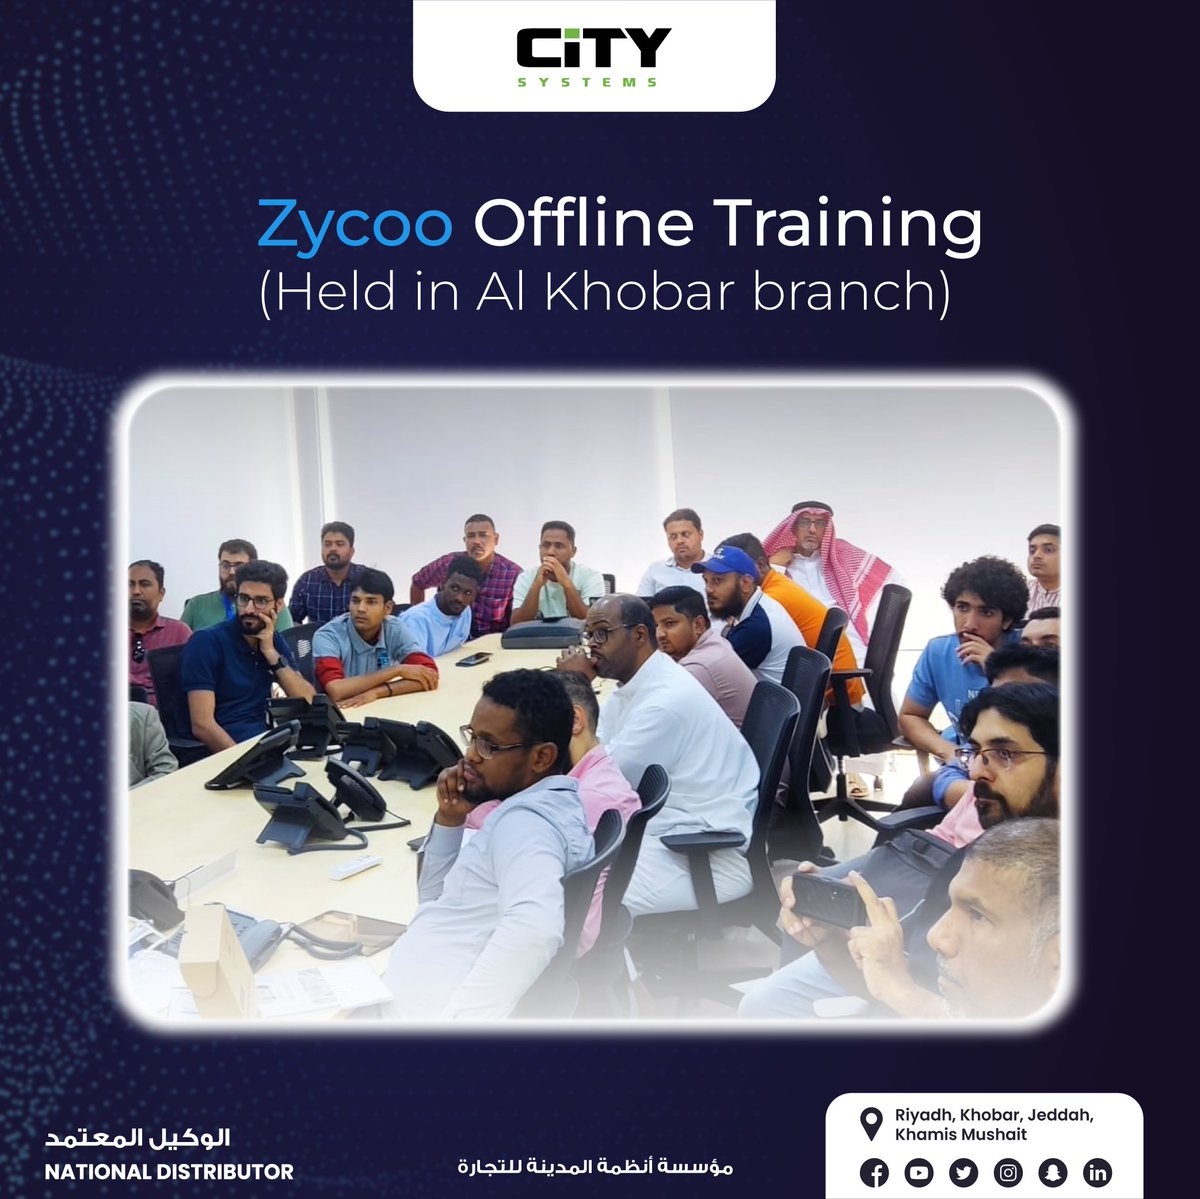 Zycoo Offline Training (Held in Al Khobar branch)
#Zycoo #CooVox #IPPBX #VOIP #ipphone #officephone #SaudiArabia #سعودية #citysystems